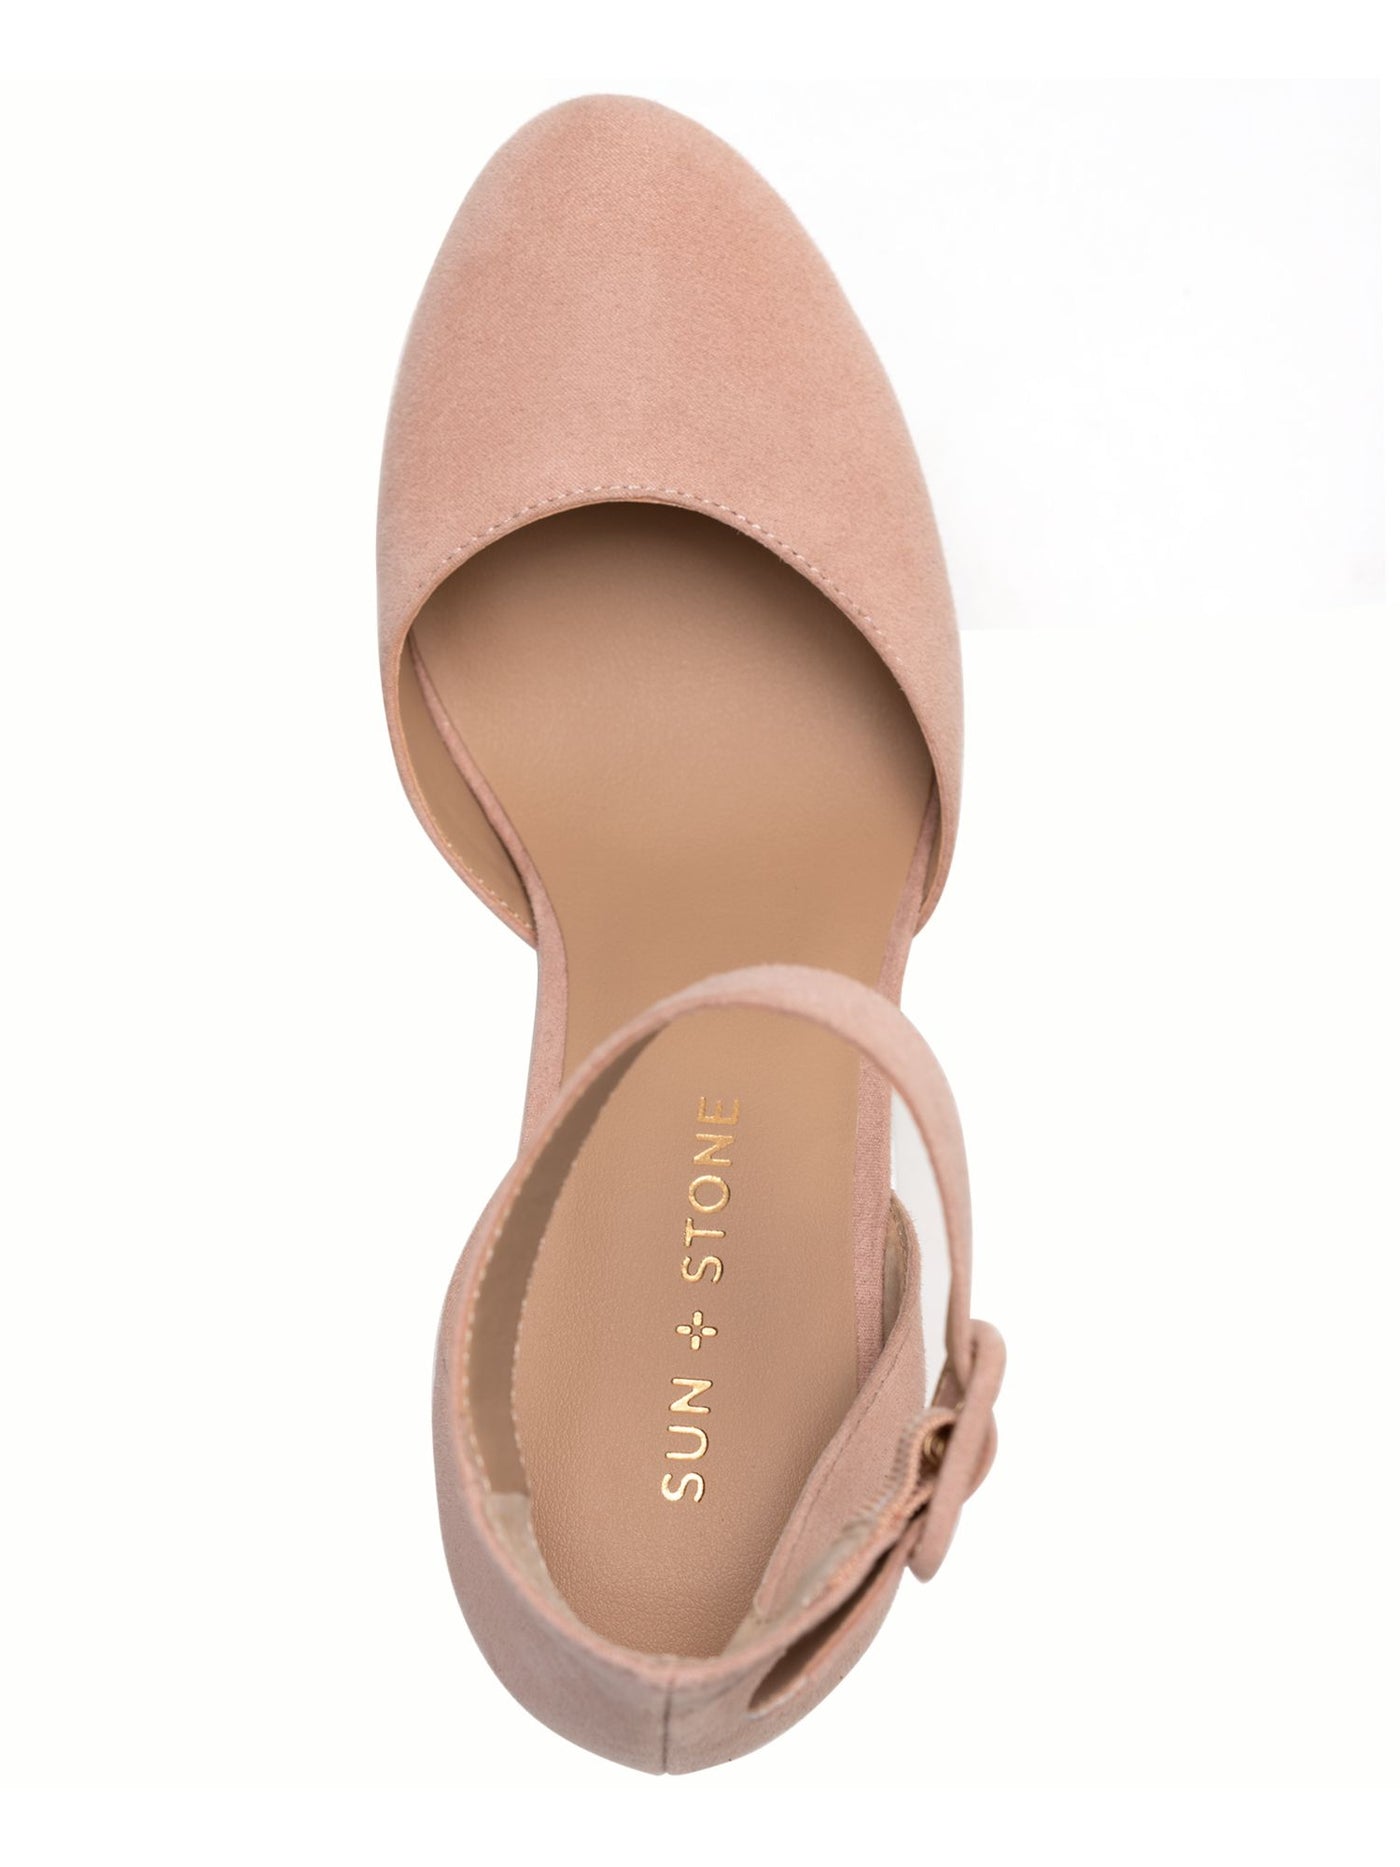 SUN STONE Womens Pink 1" Platform Padded Adjustable Ankle Strap Estrella Round Toe Block Heel Buckle Pumps Shoes 11 M